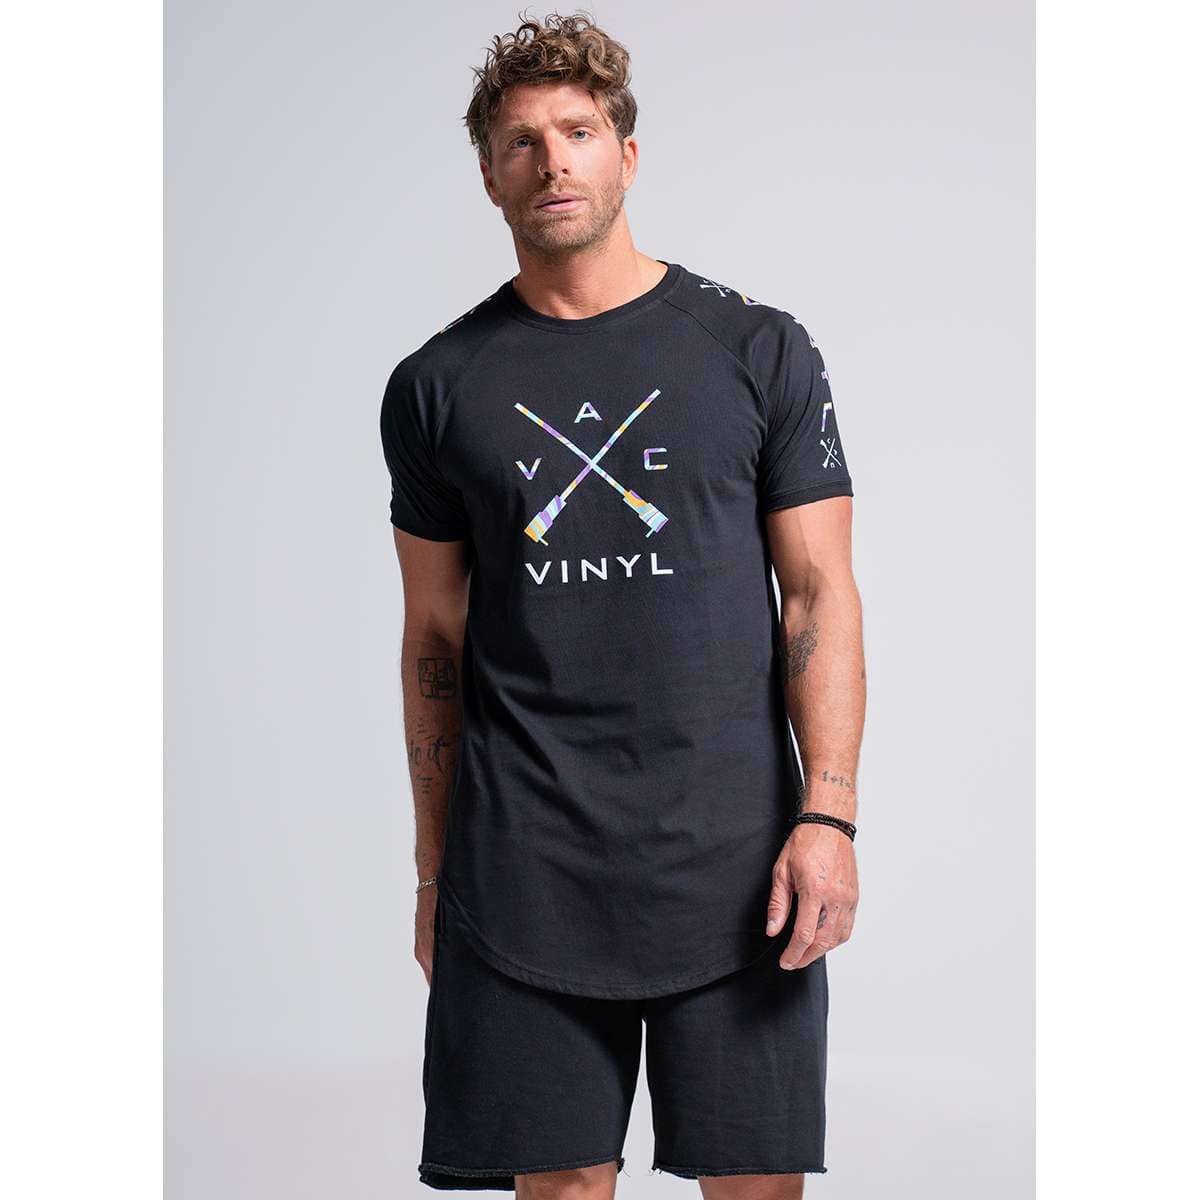 VINYL ART CLOTHING LINED COLOURS T-SHIRT 82960-01 BLACK